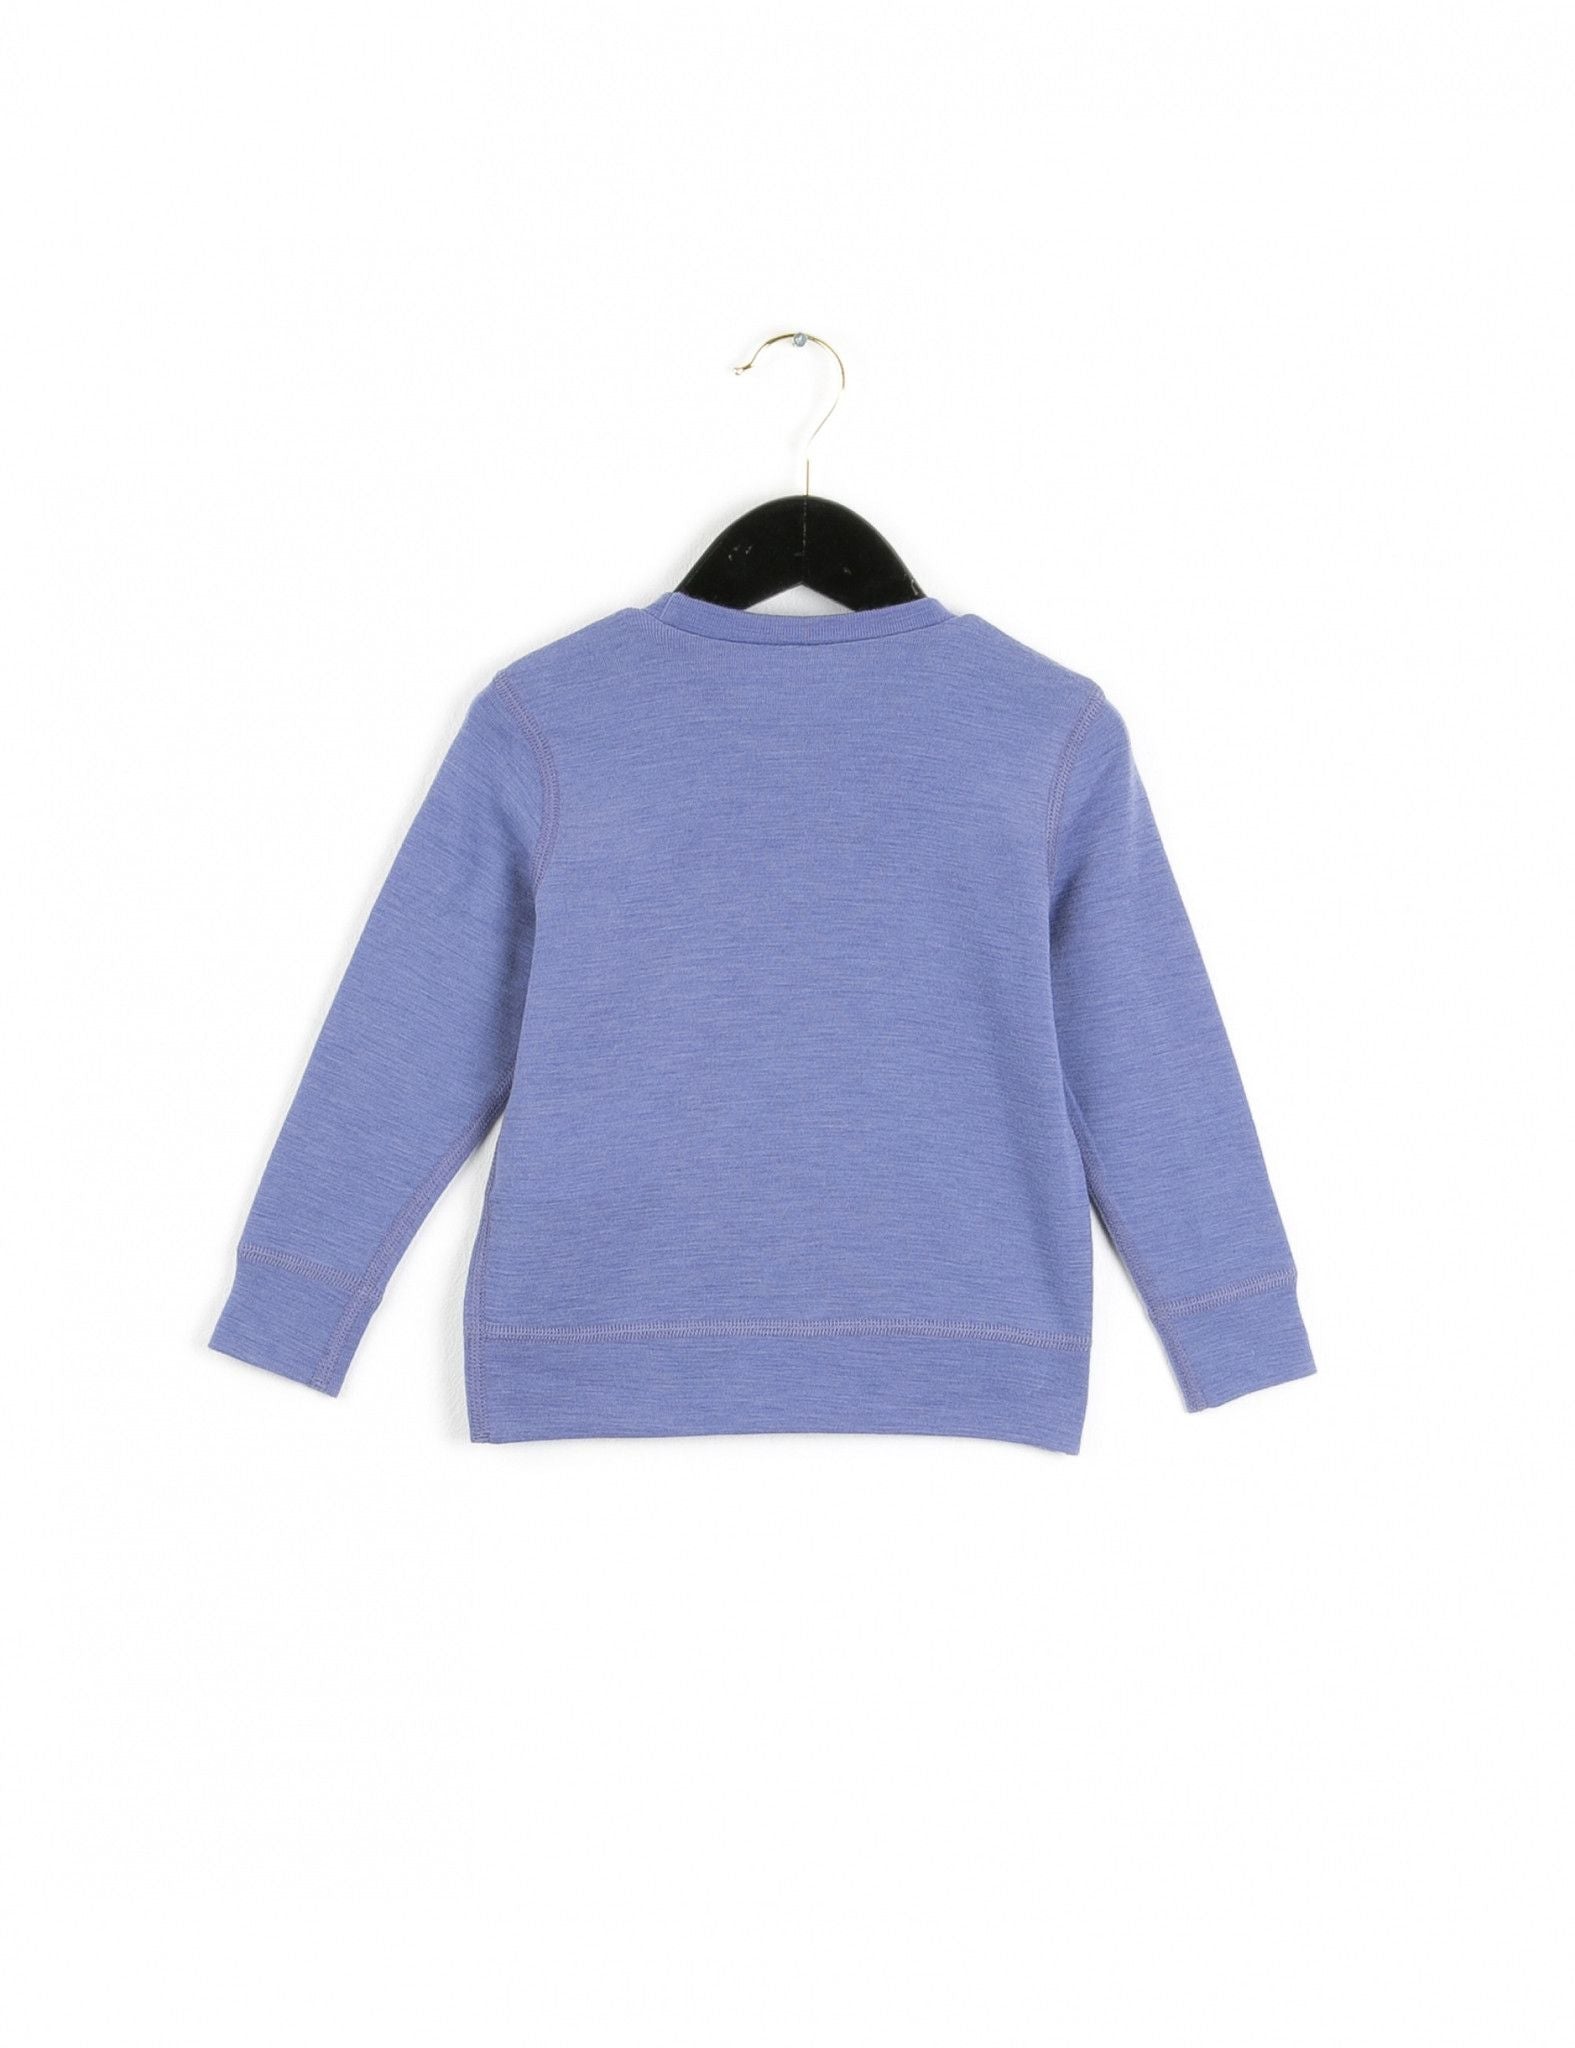 Panda Wool Blue Base Layer Shirt - CÉMAROSE | Children's Fashion Store - 2